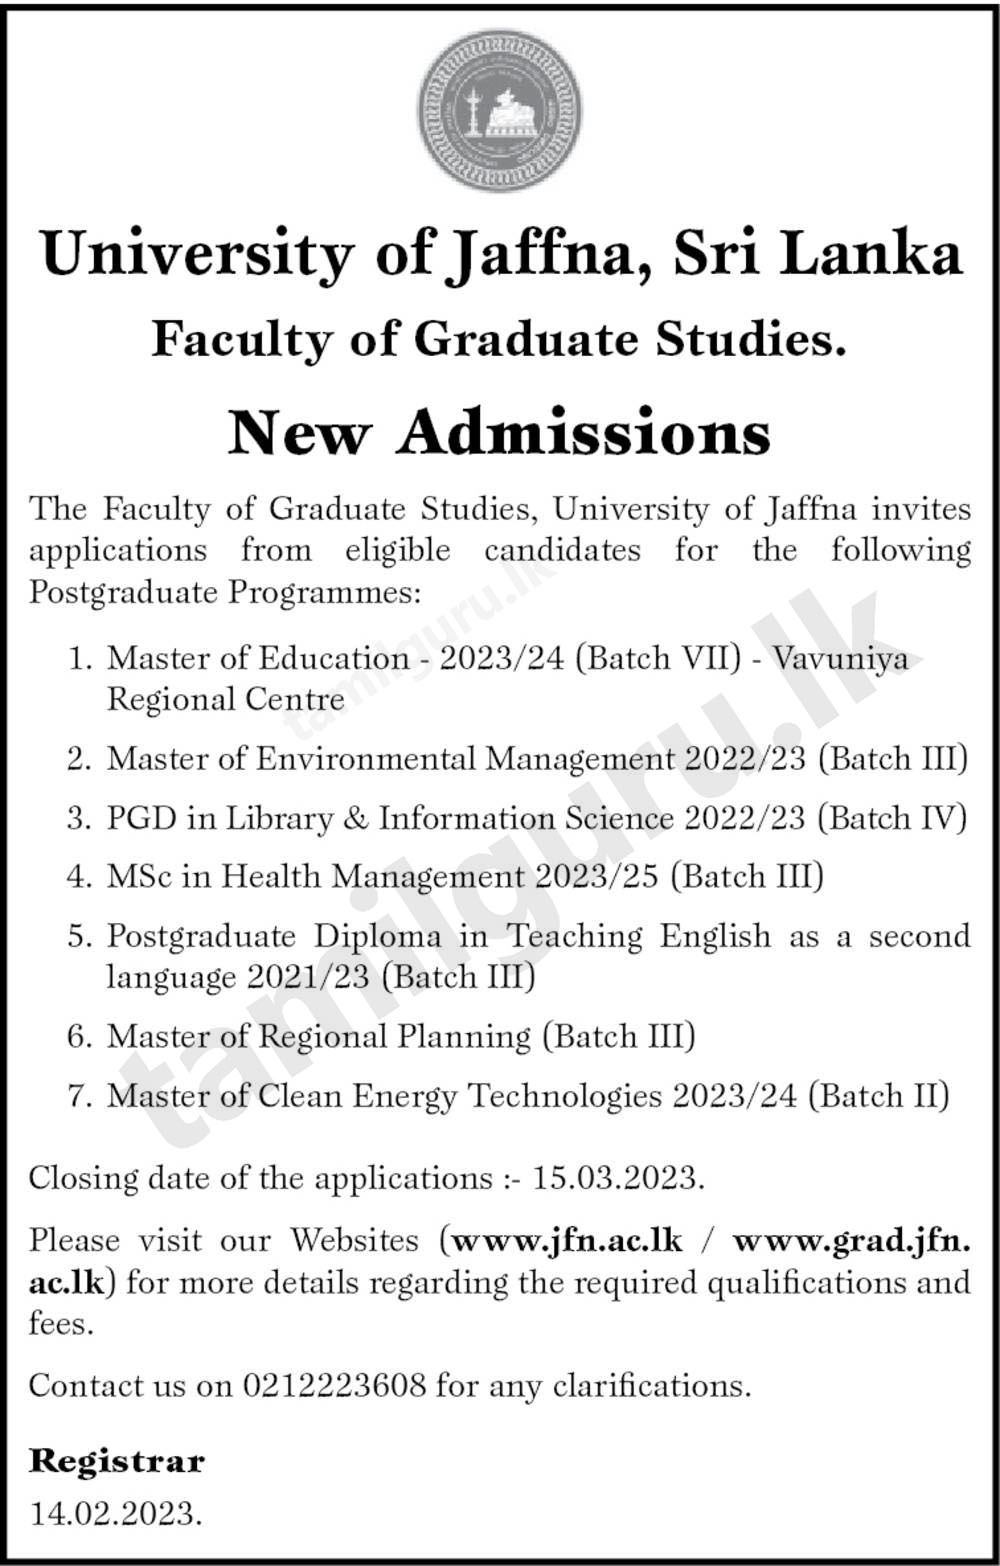 New Admissions for Postgraduate Programmes (2023) - University of Jaffna